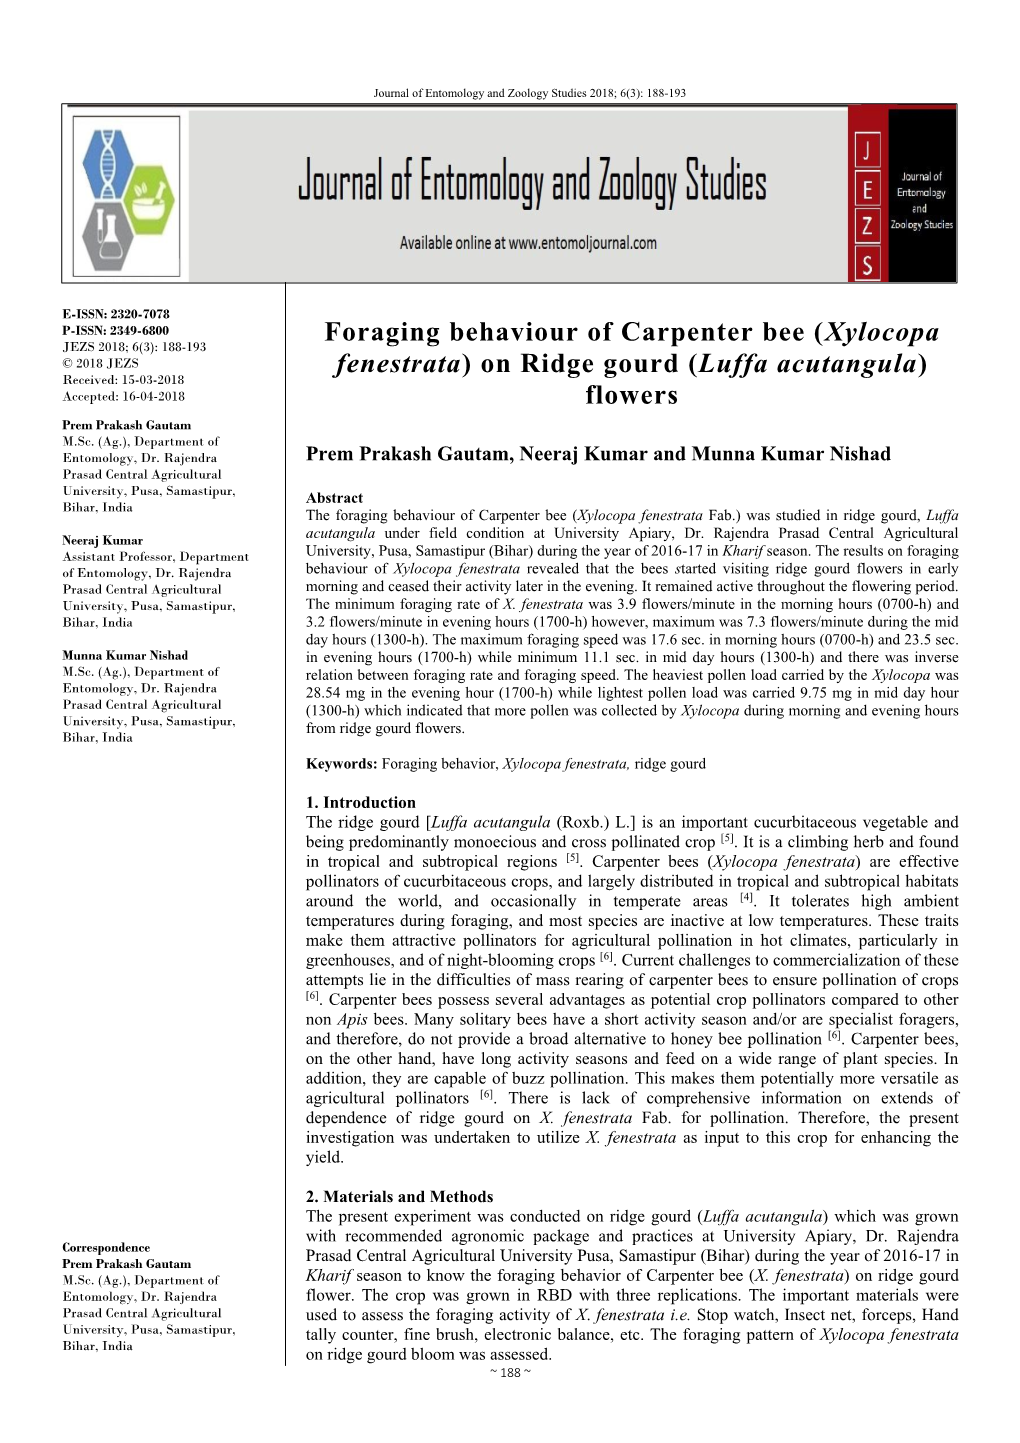 Foraging Behaviour of Carpenter Bee (Xylocopa Fenestrata)